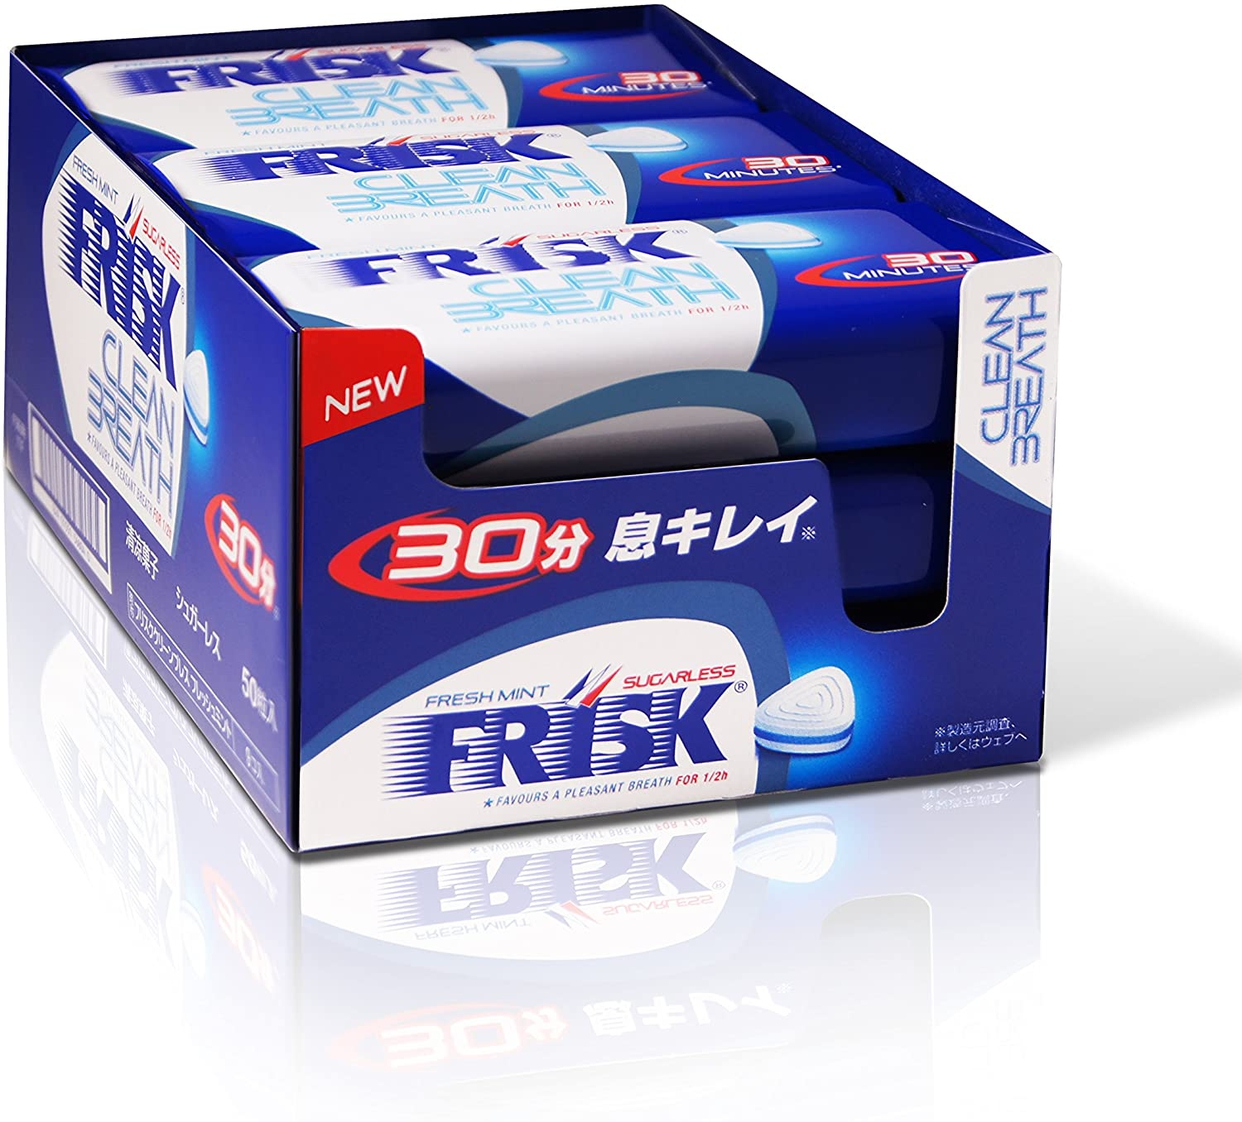 FRISK(フリスク) クリーンブレスの商品画像サムネ3 